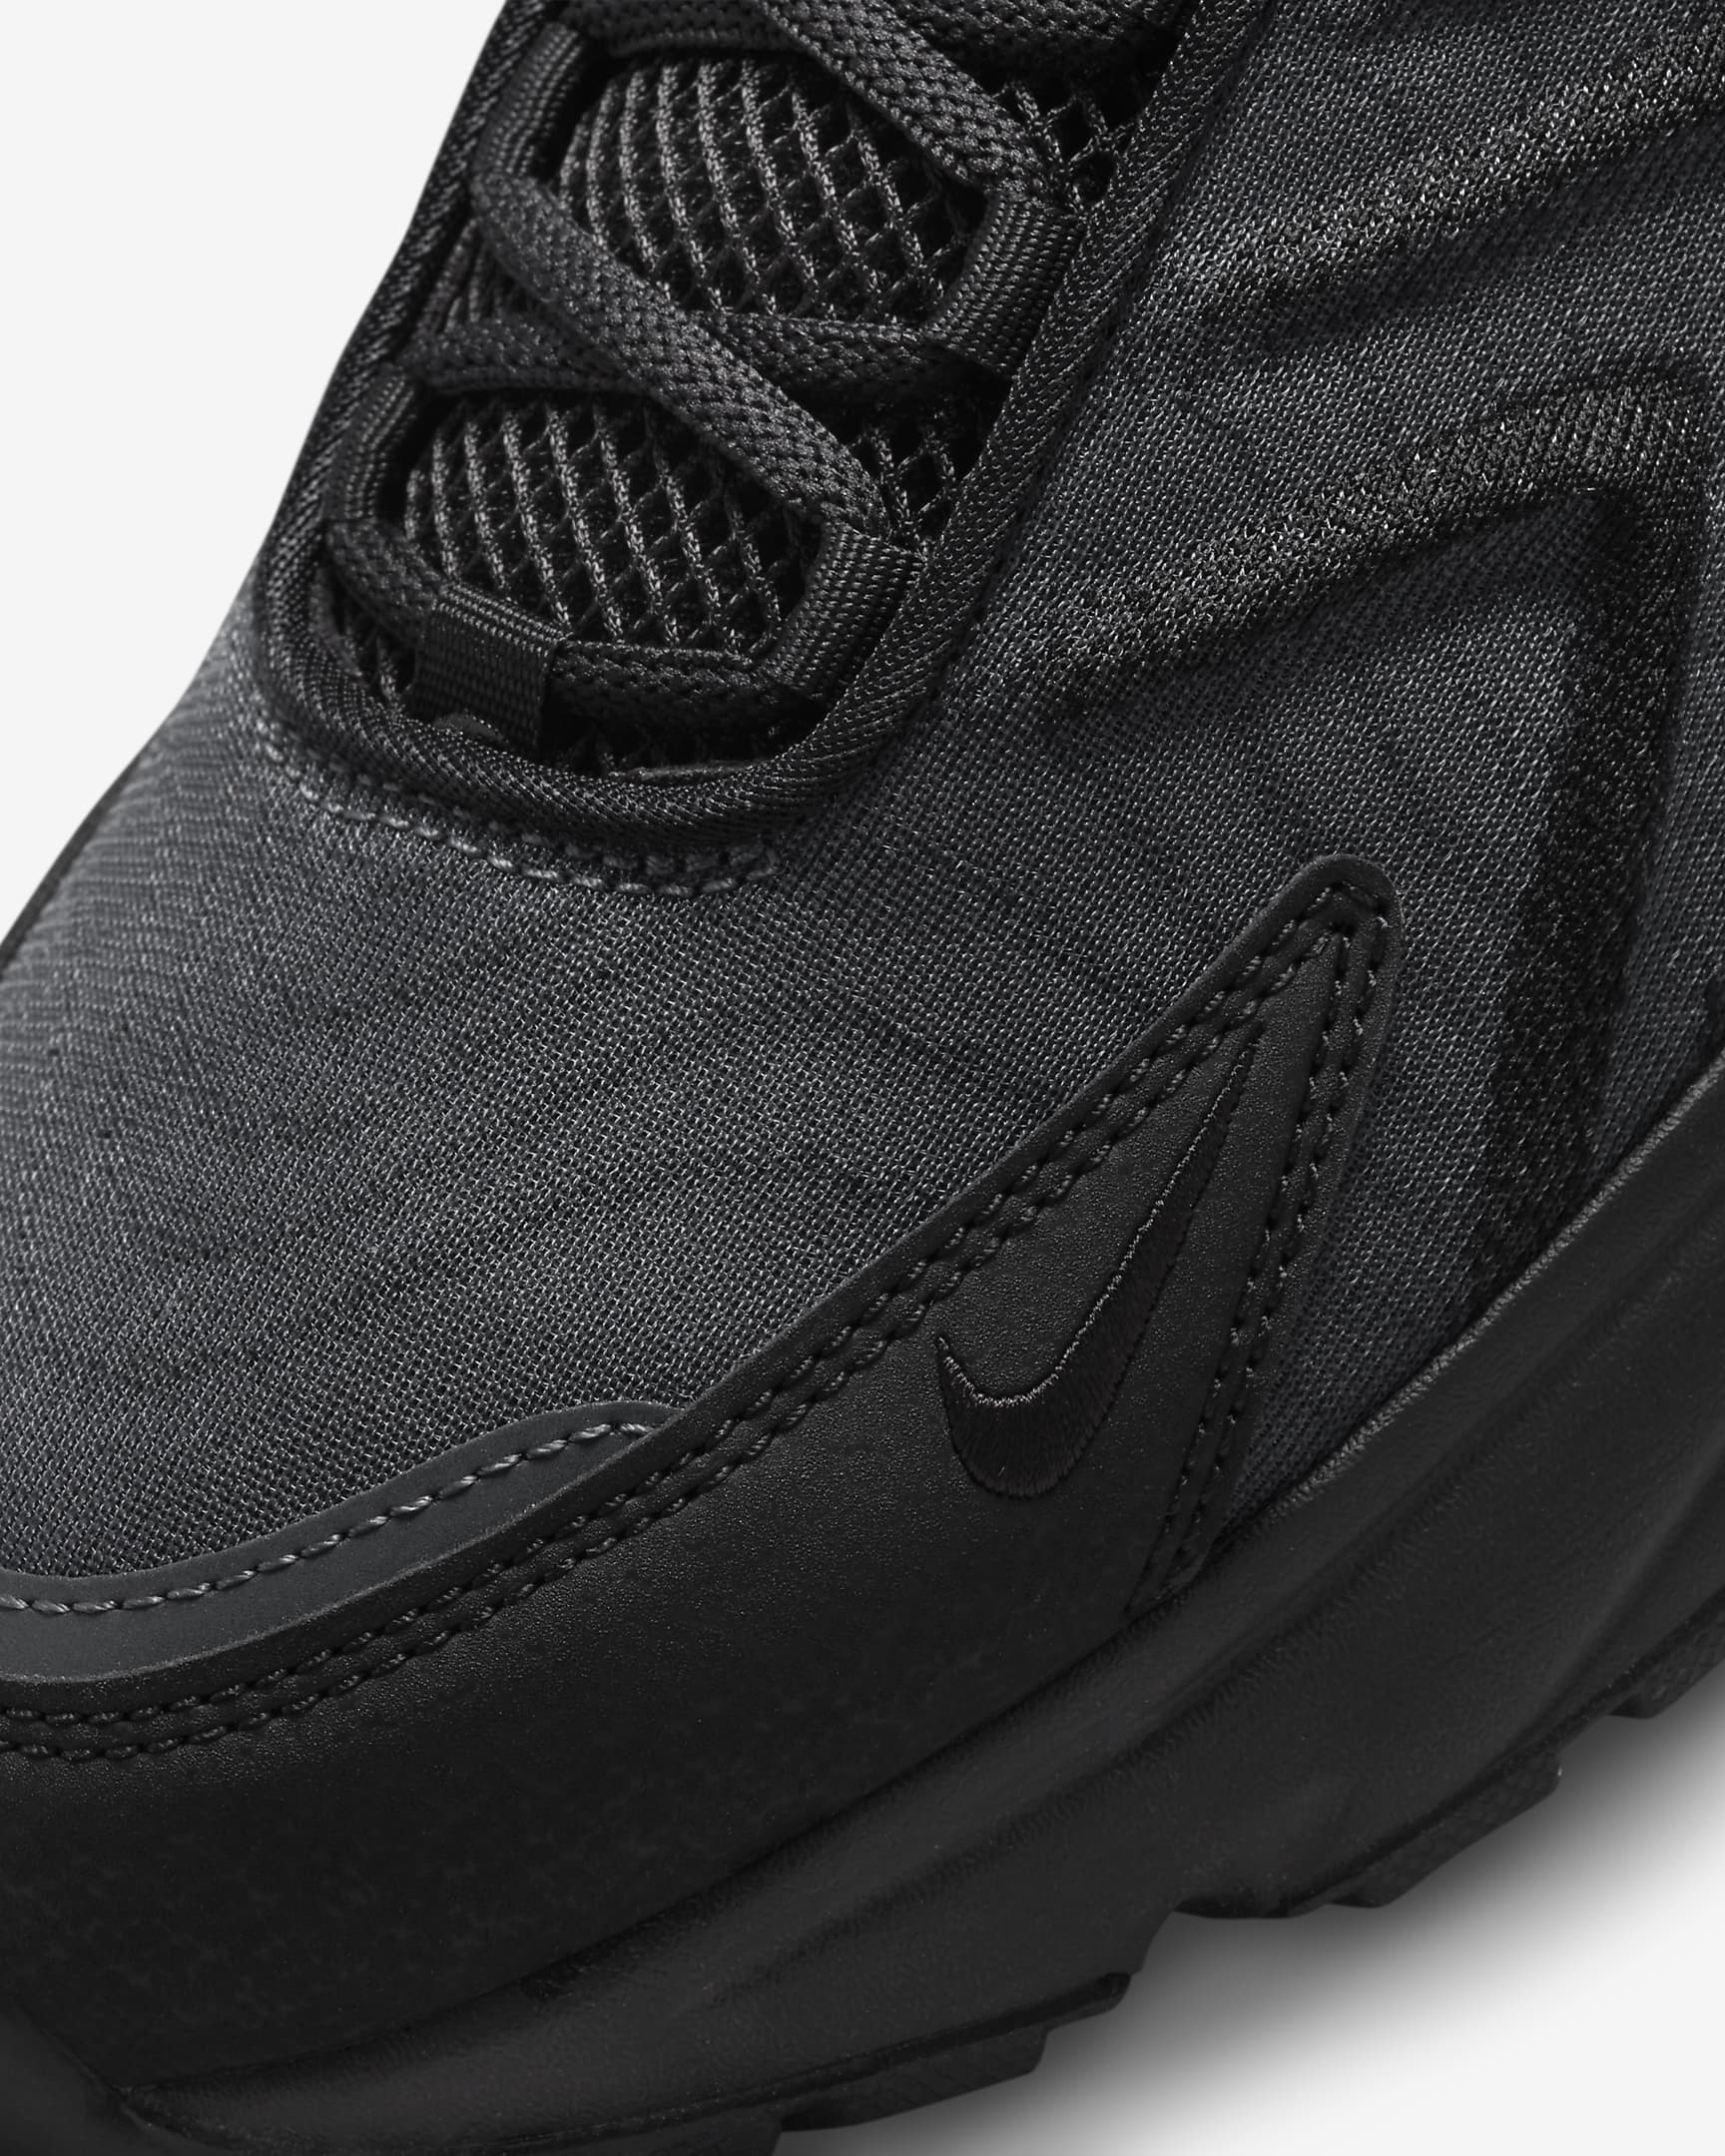 Nike Air Max TW Men's Shoes - Black/Anthracite/Black/Black